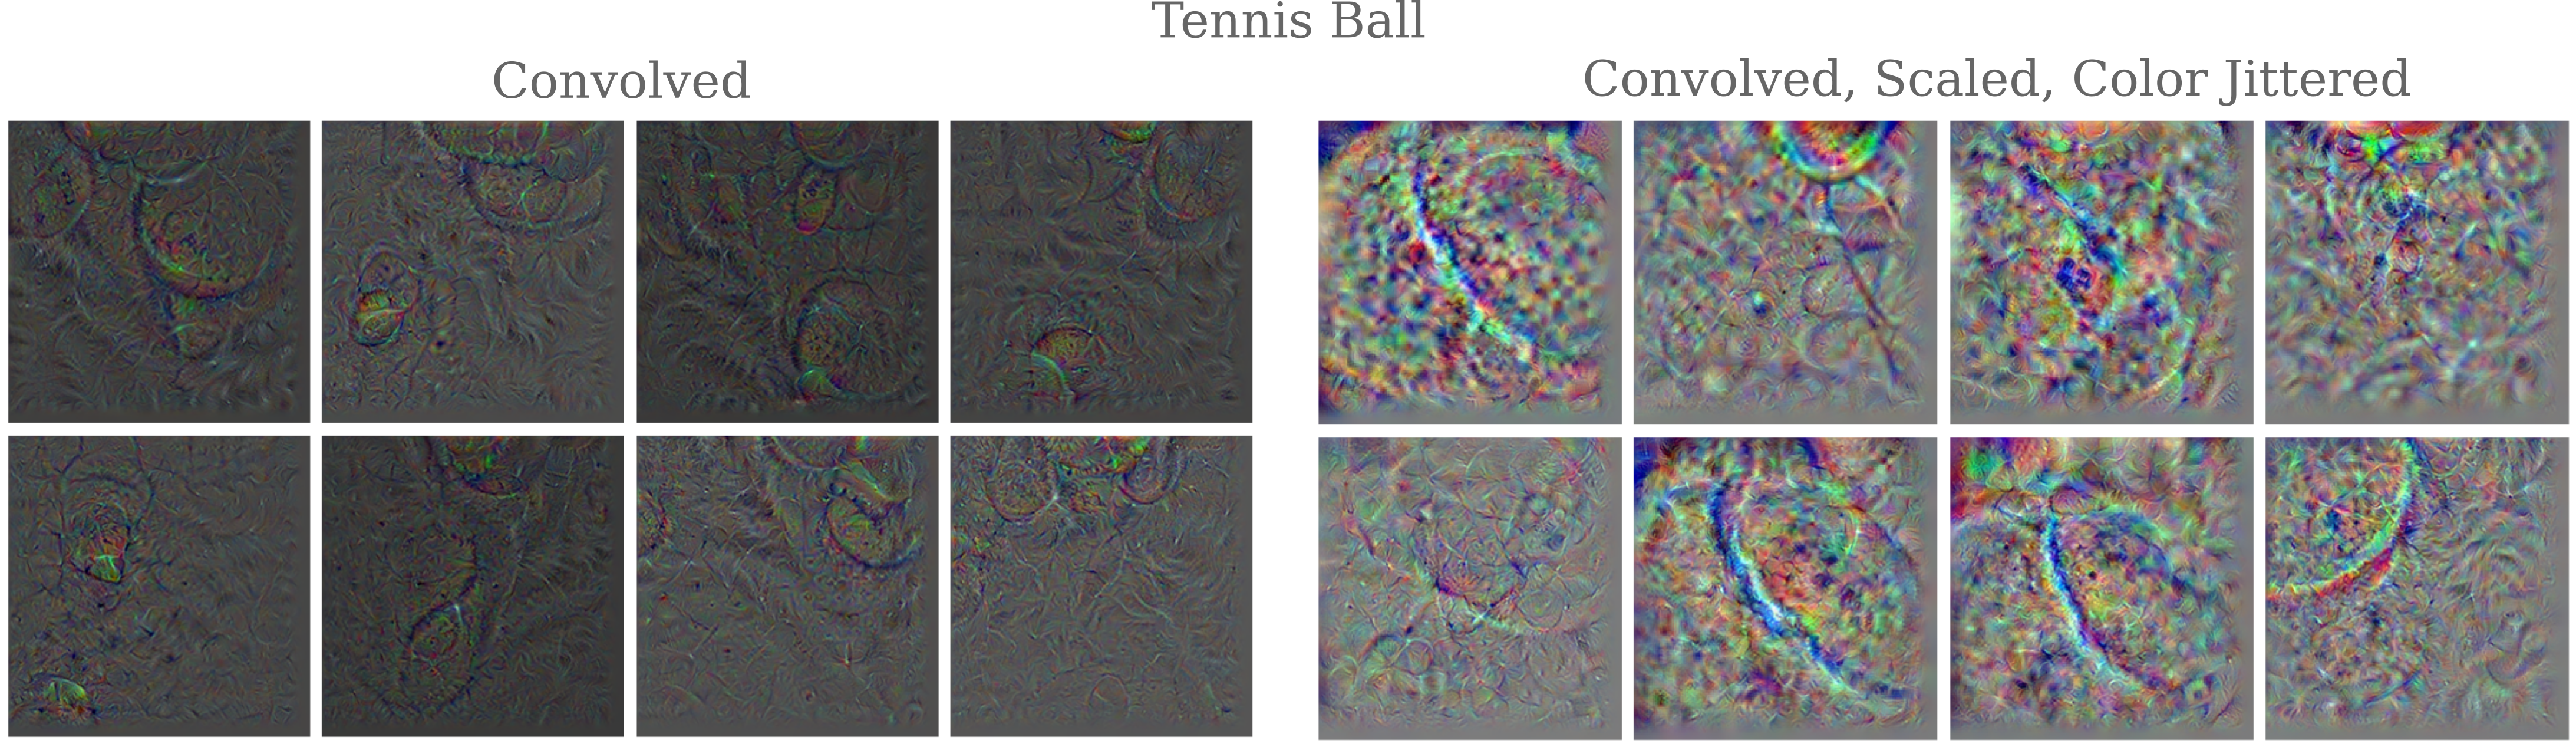 generated tennisballs